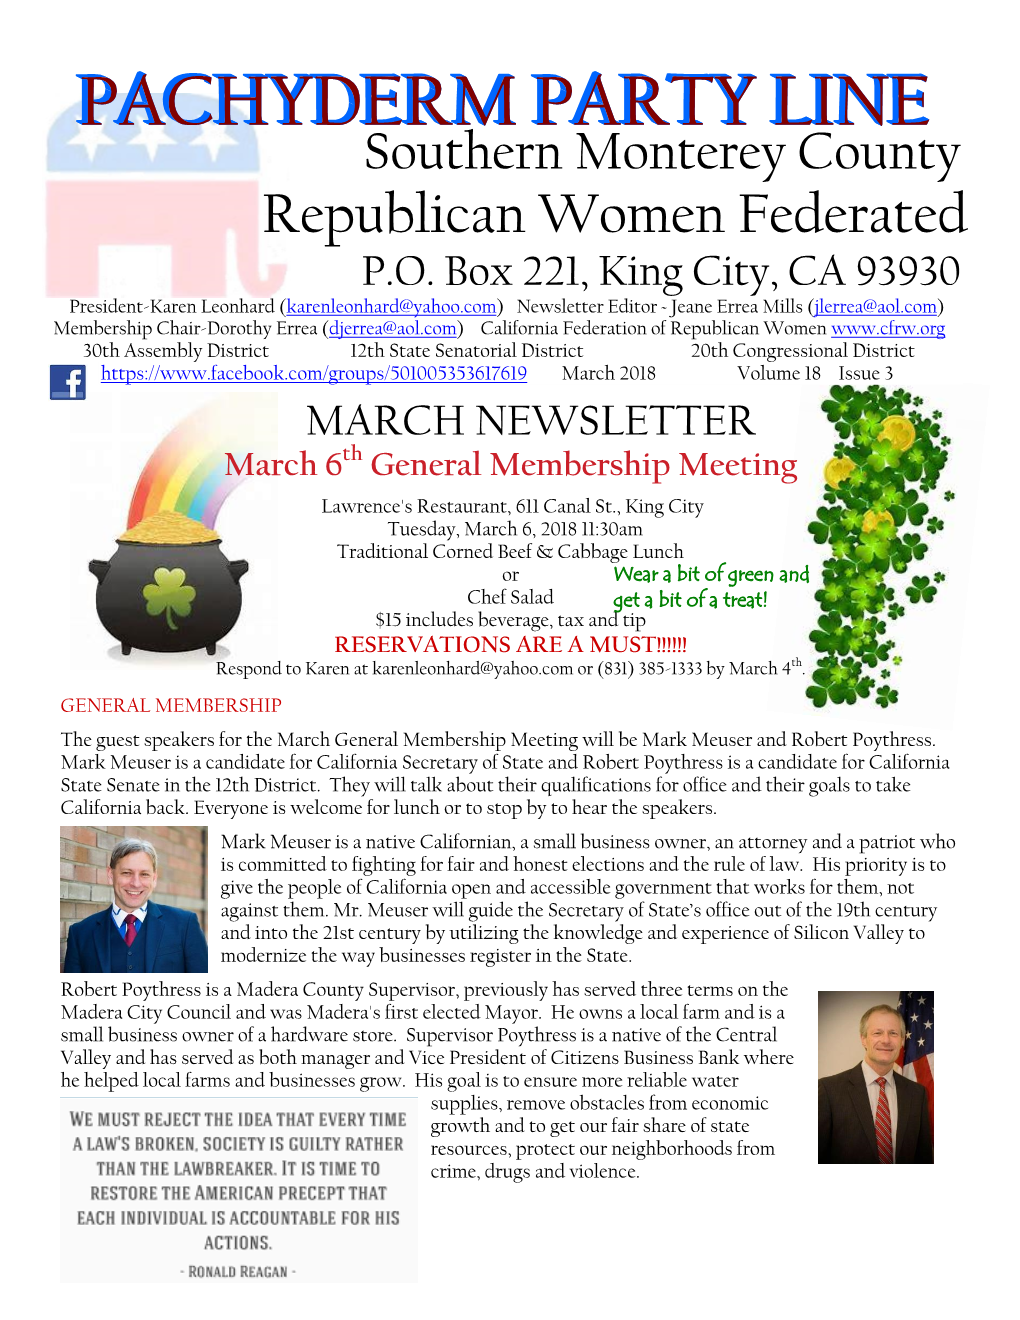 Republican Women Federated P.O